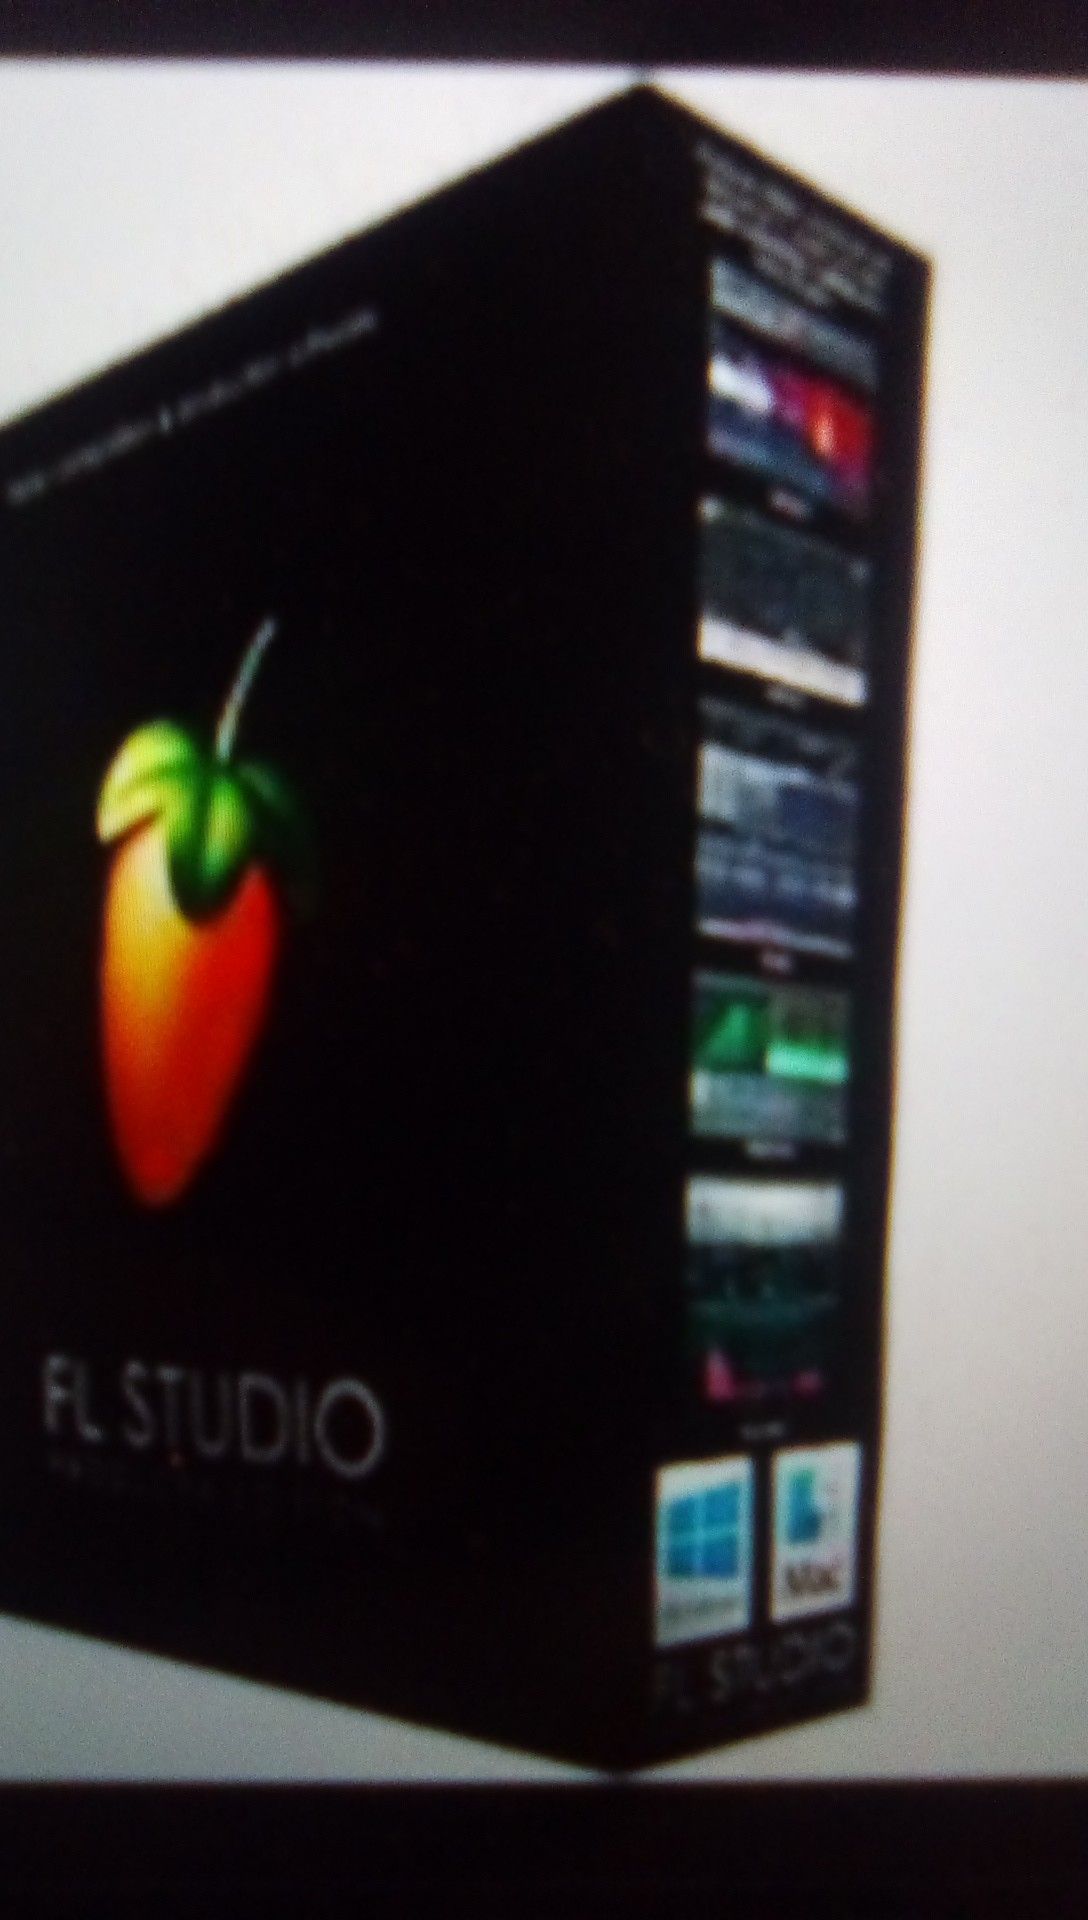 FL studio 20 producer edition latest version